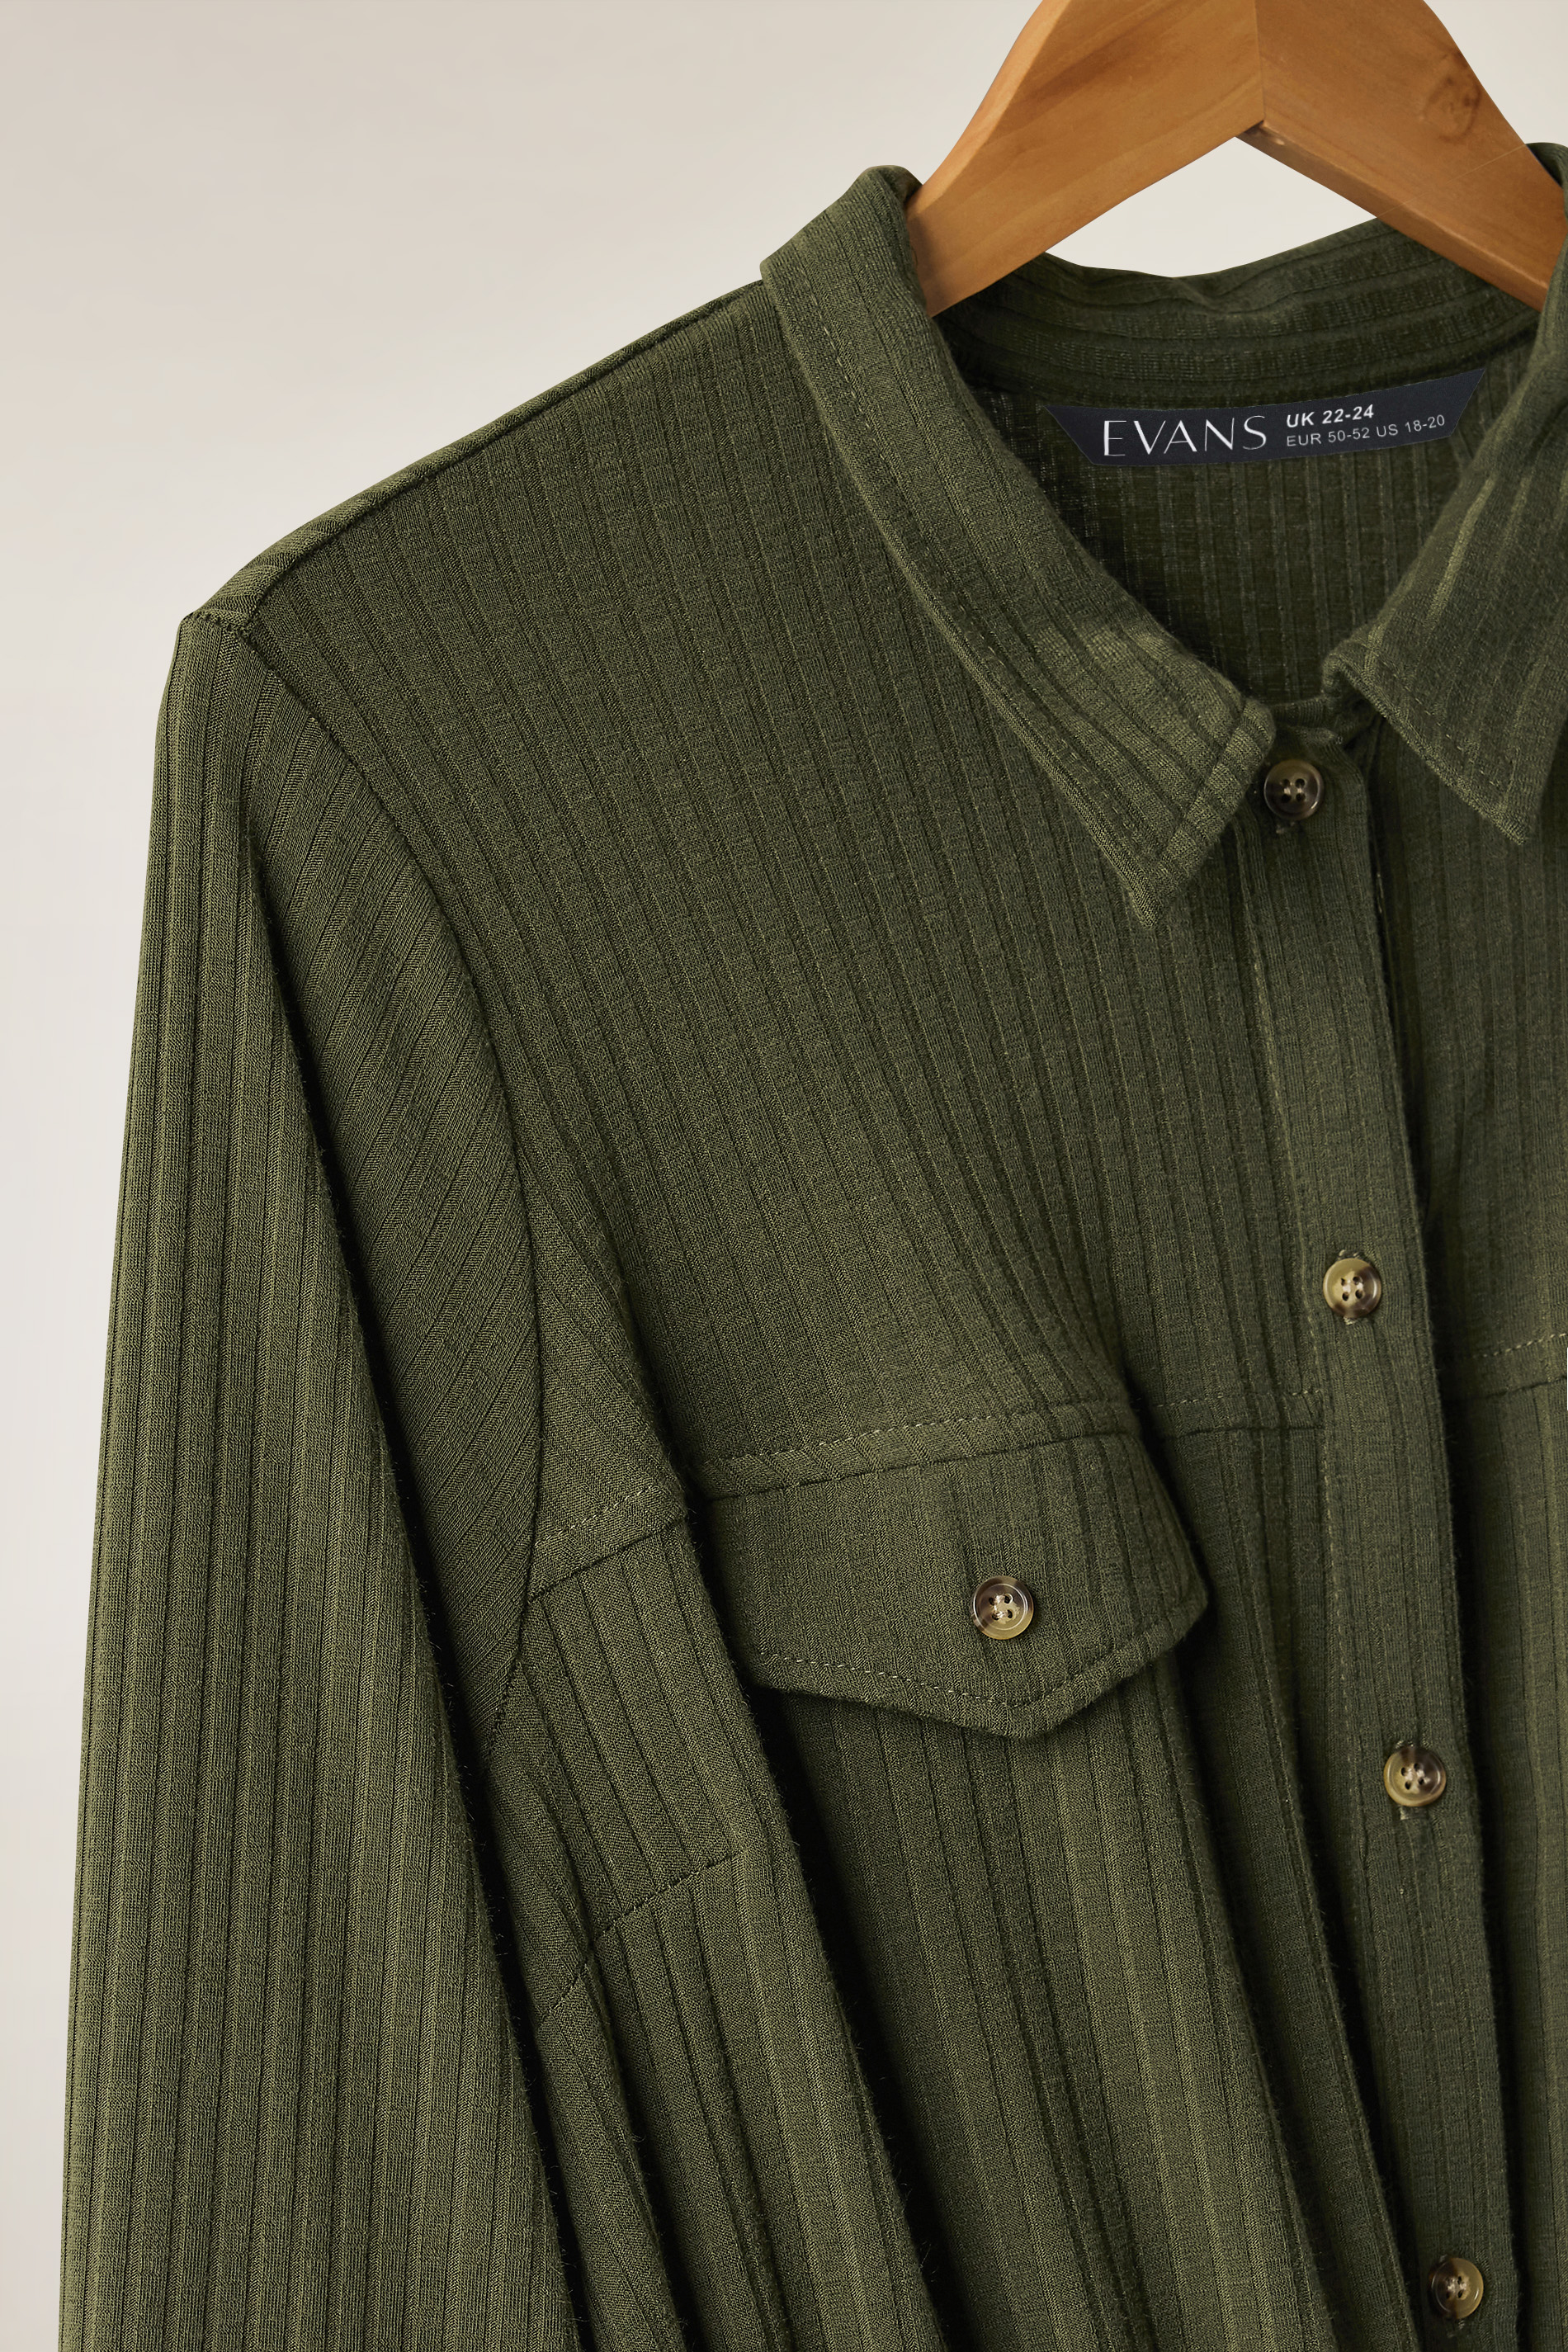 LIMITED COLLECTION Plus Size Khaki Green Utility Shirt Dress